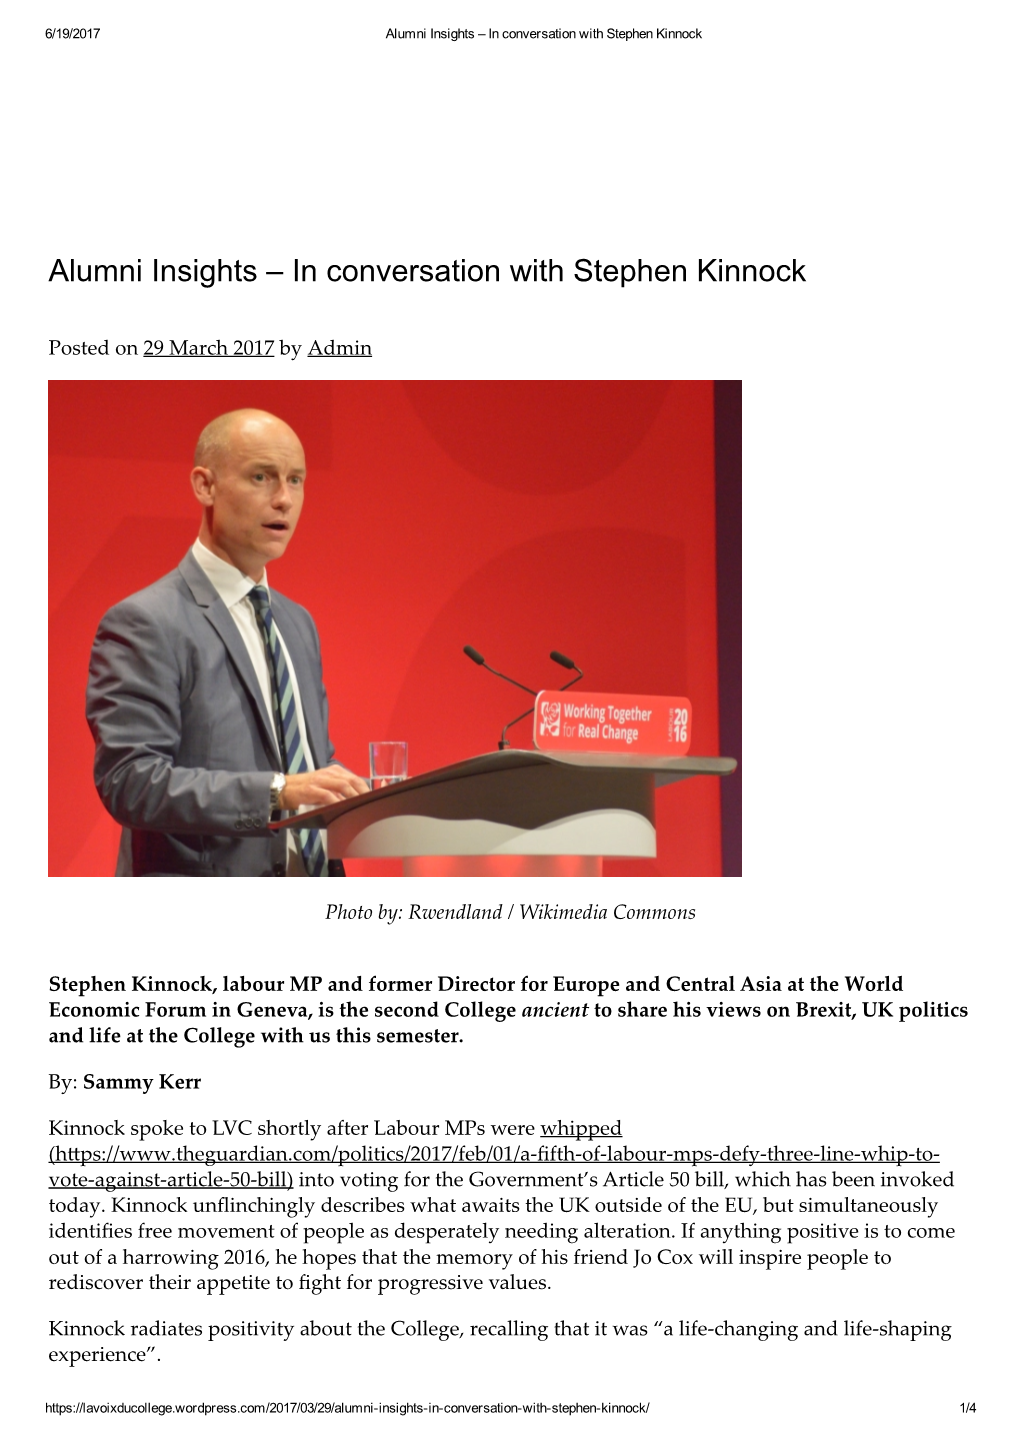 Alumni Insights – in Conversation with Stephen Kinnock